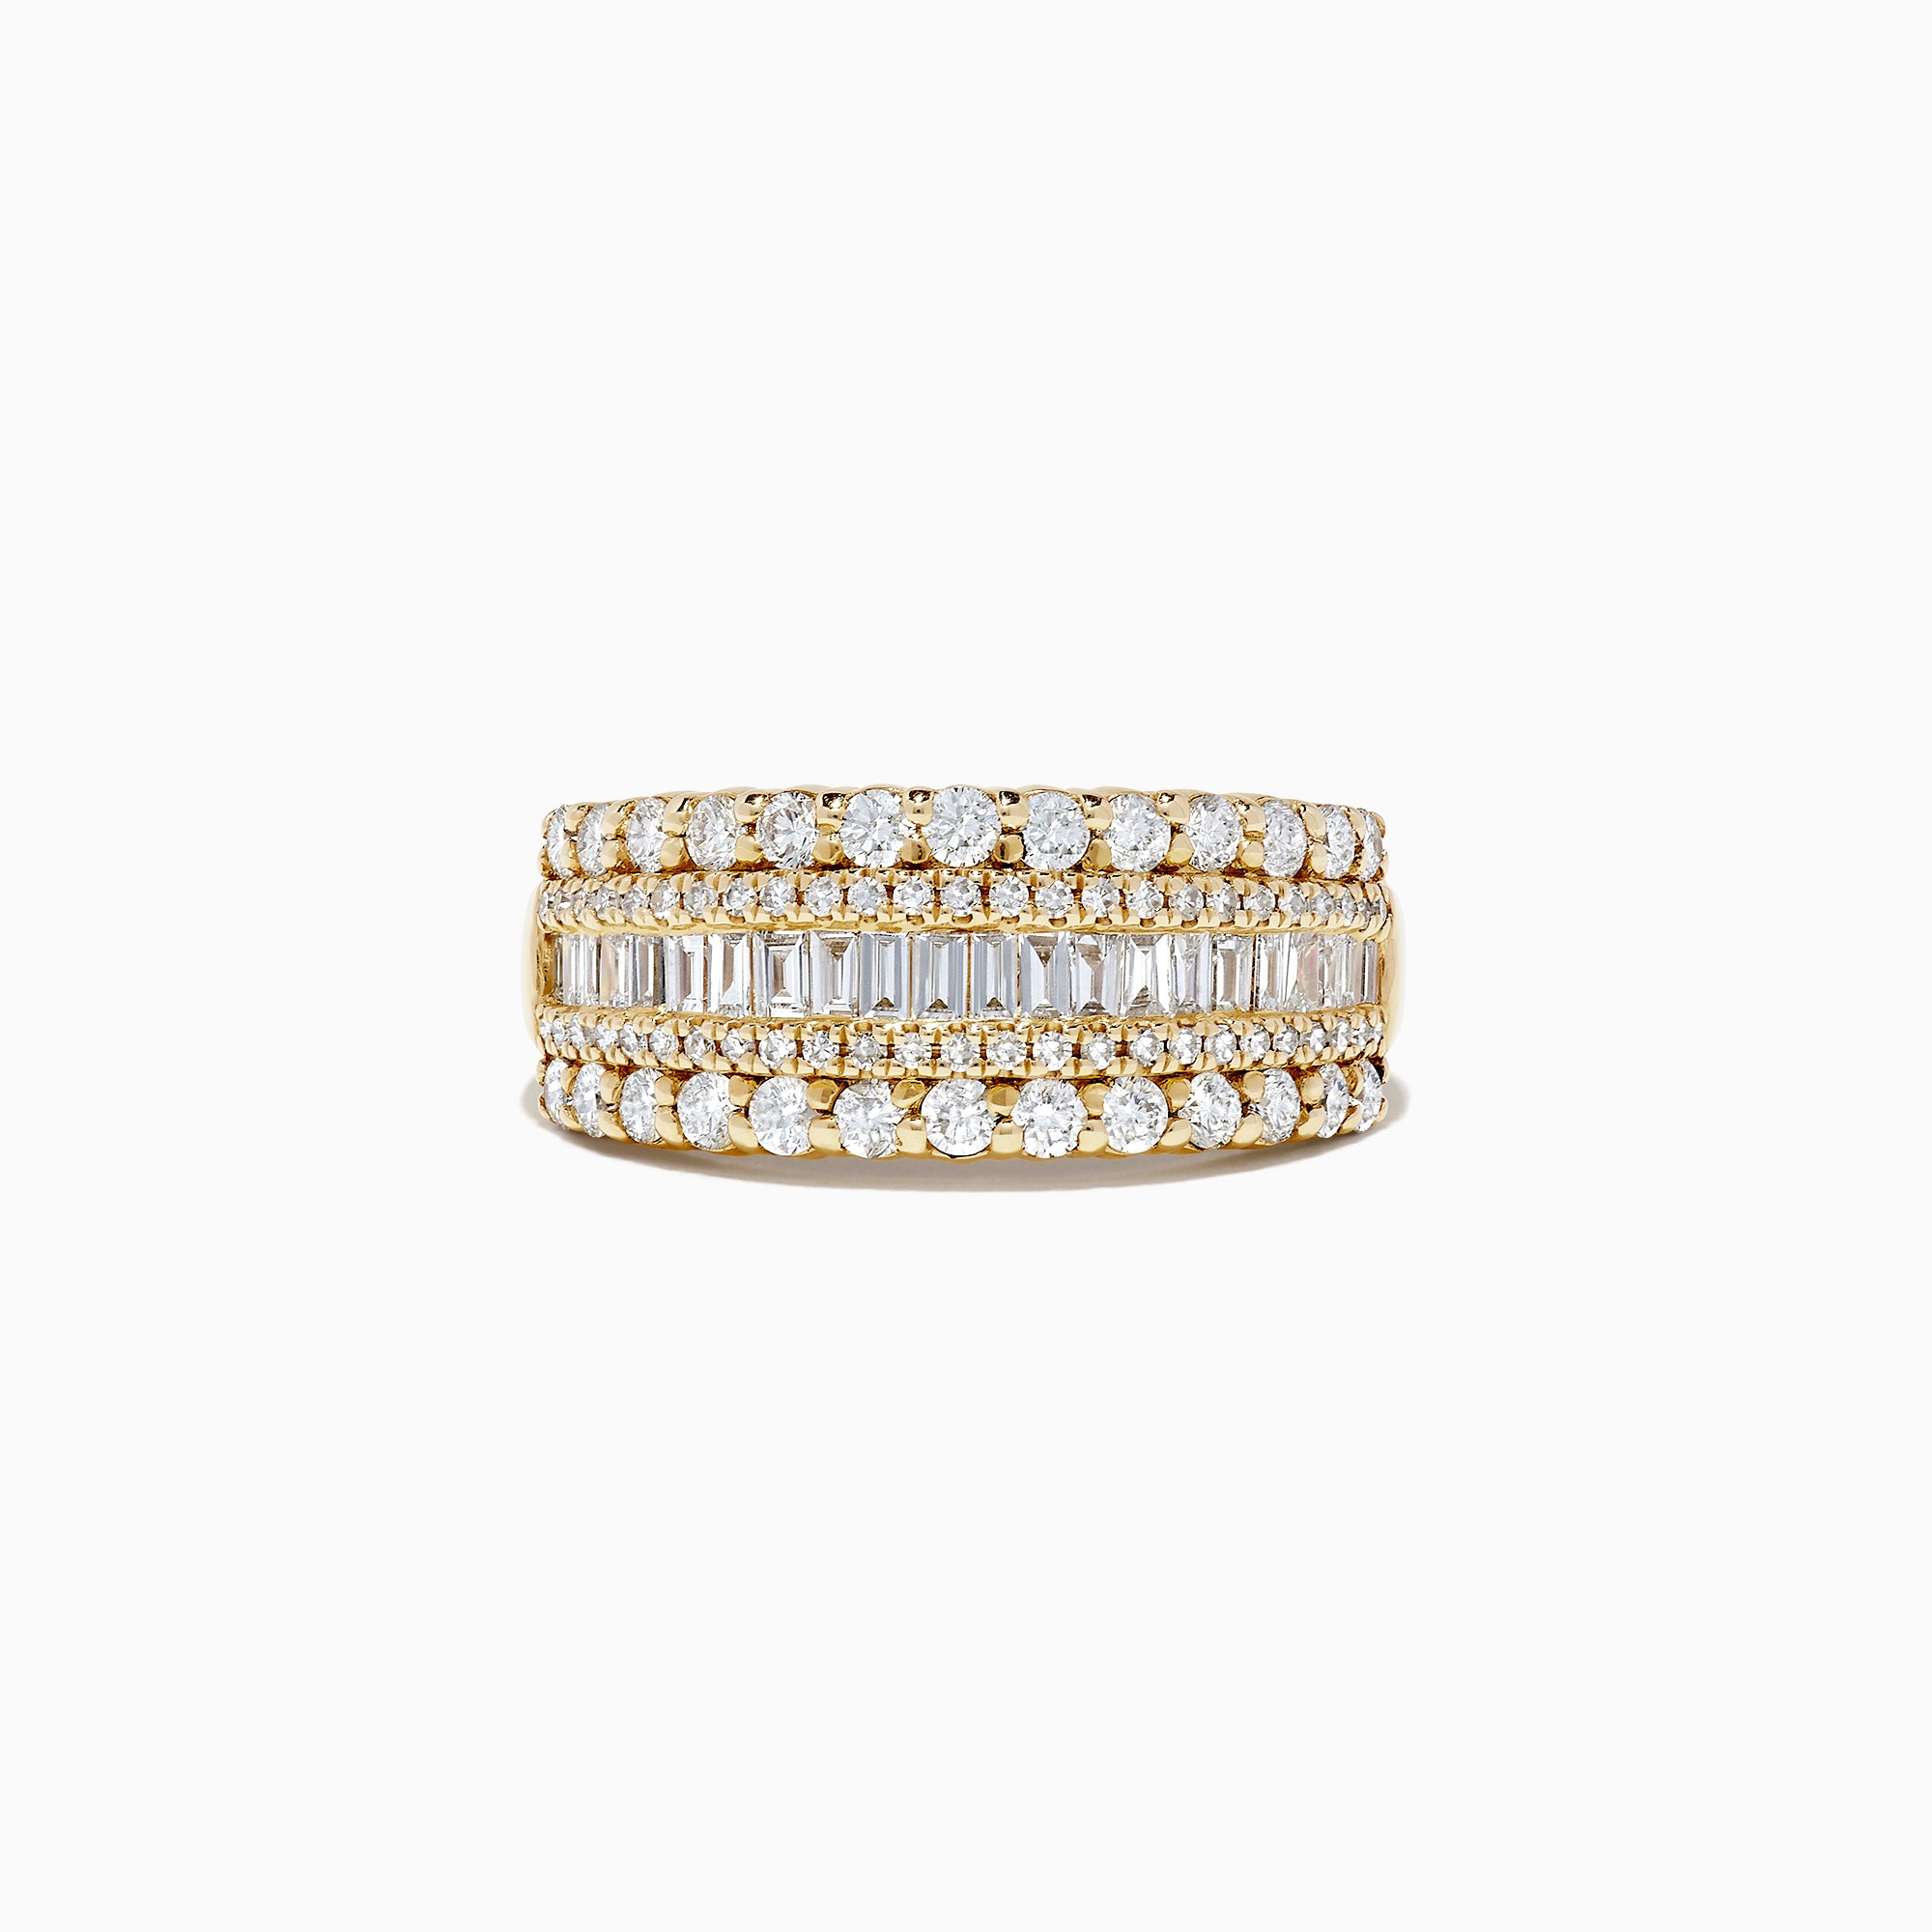 Effy D'Oro 14K Yellow Gold Diamond Ring, 1.21 TCW